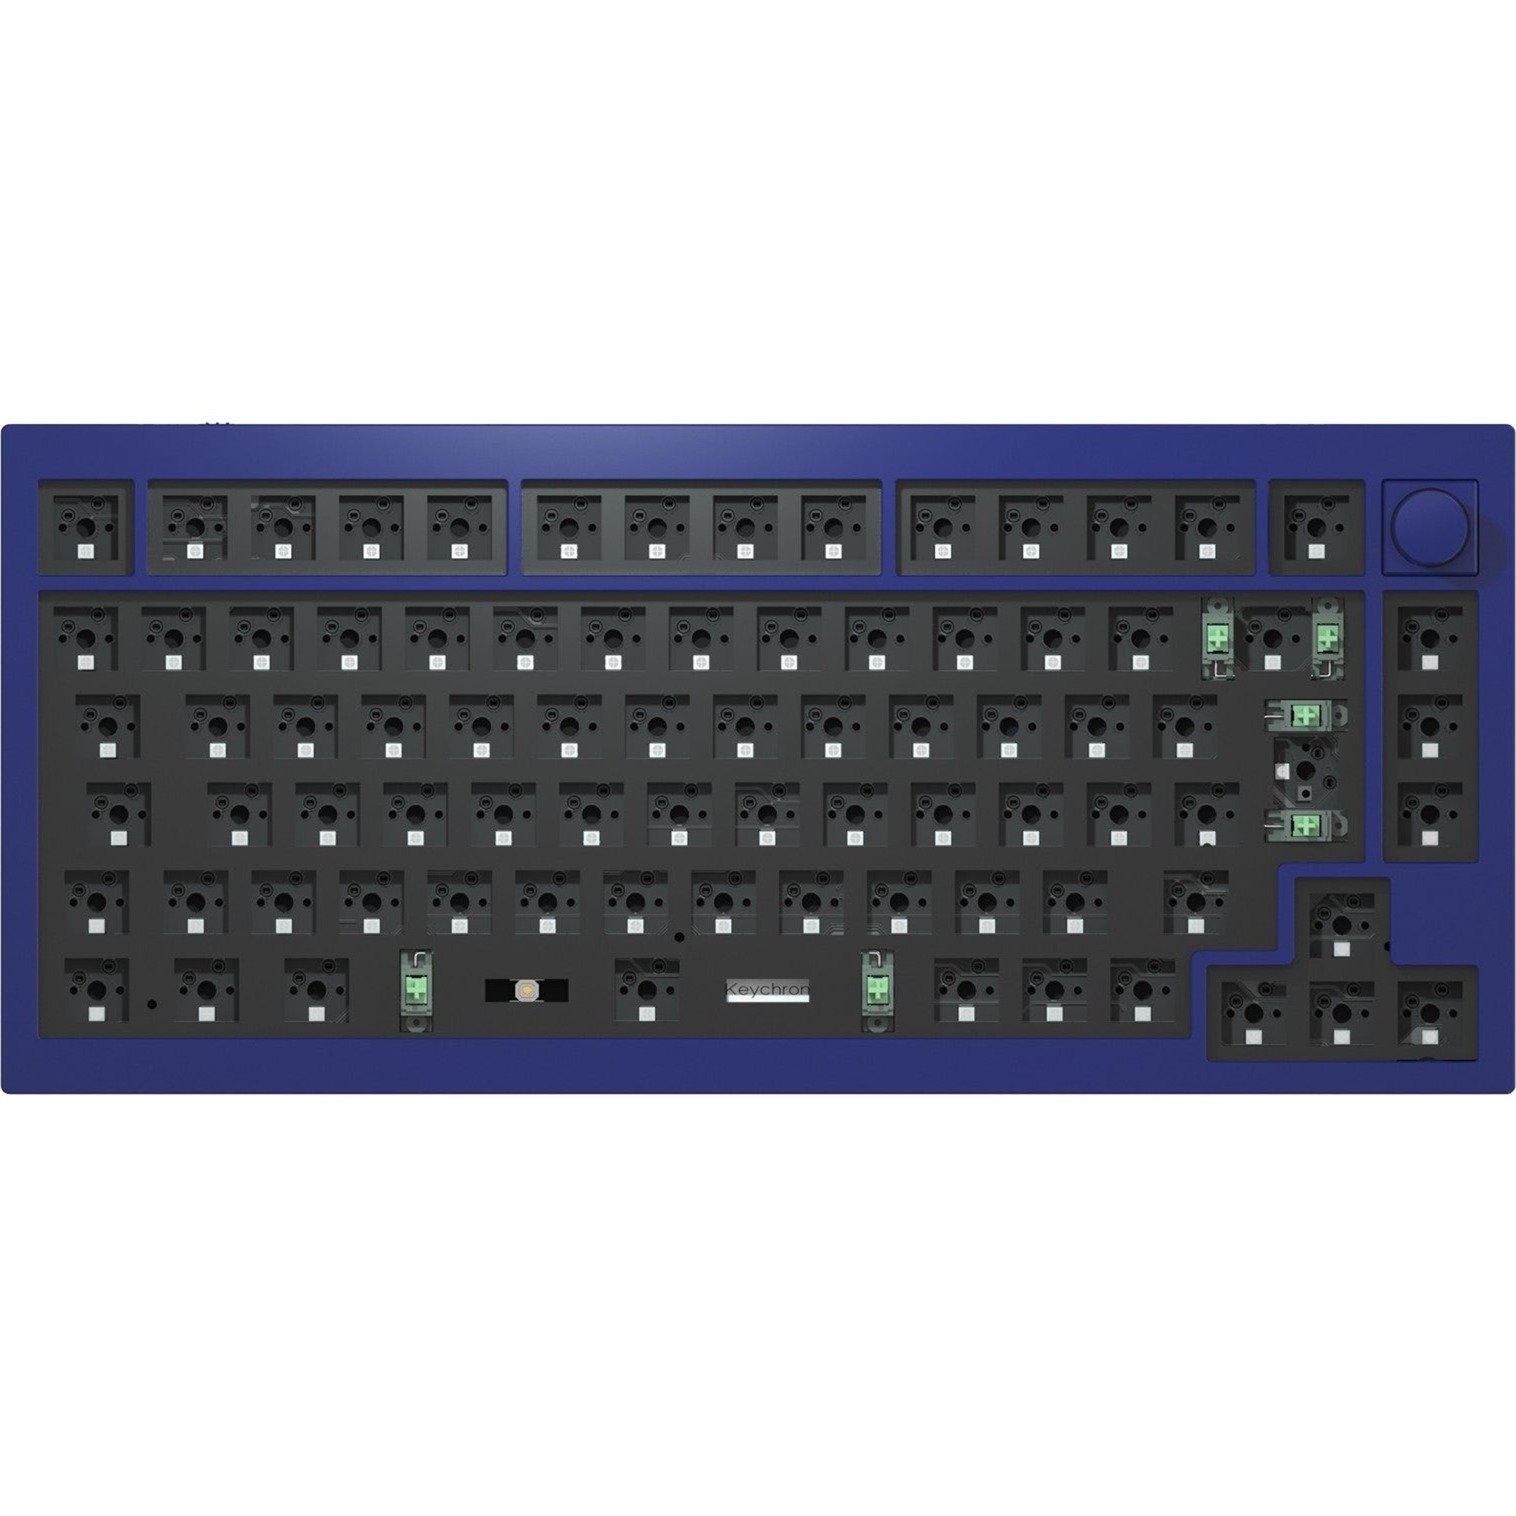 Q1 Barebone ISO Knob, Gaming-Tastatur von Keychron